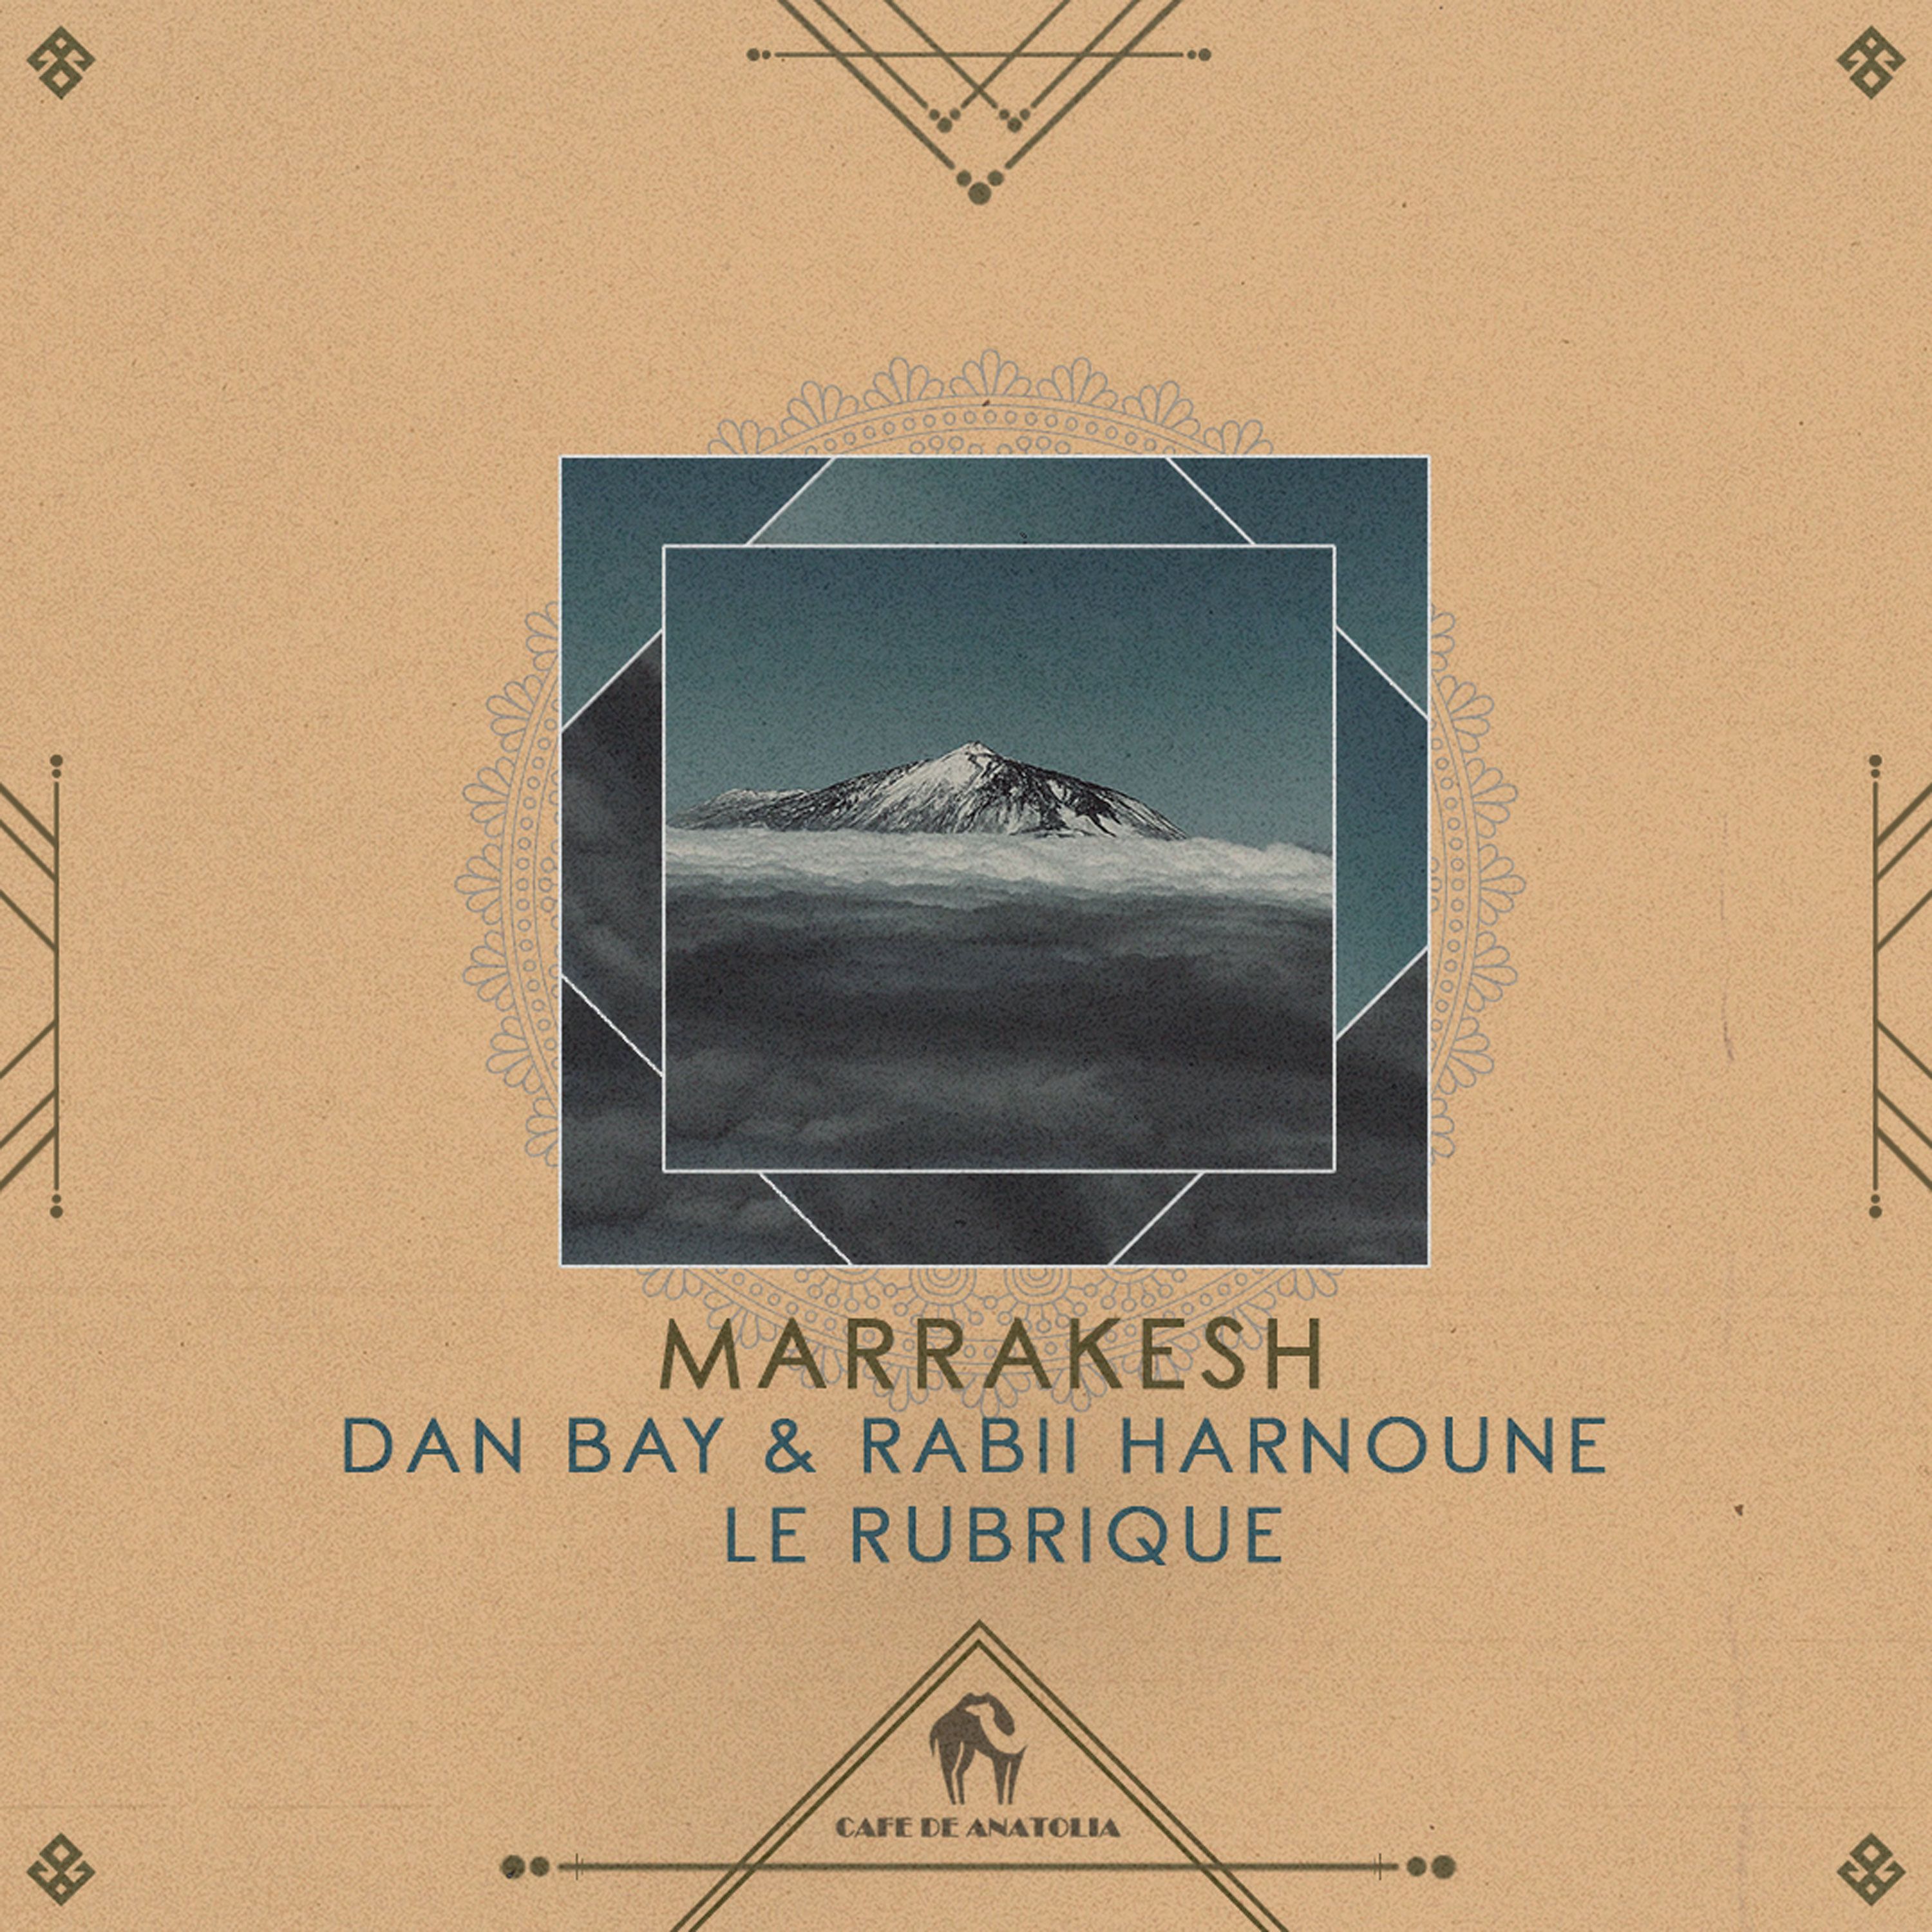 Dan Bay, Le Rubrique, Rabii Harnoune - Marrakesh (Rialians On Earth Remix) [Cafe De Anatolia]